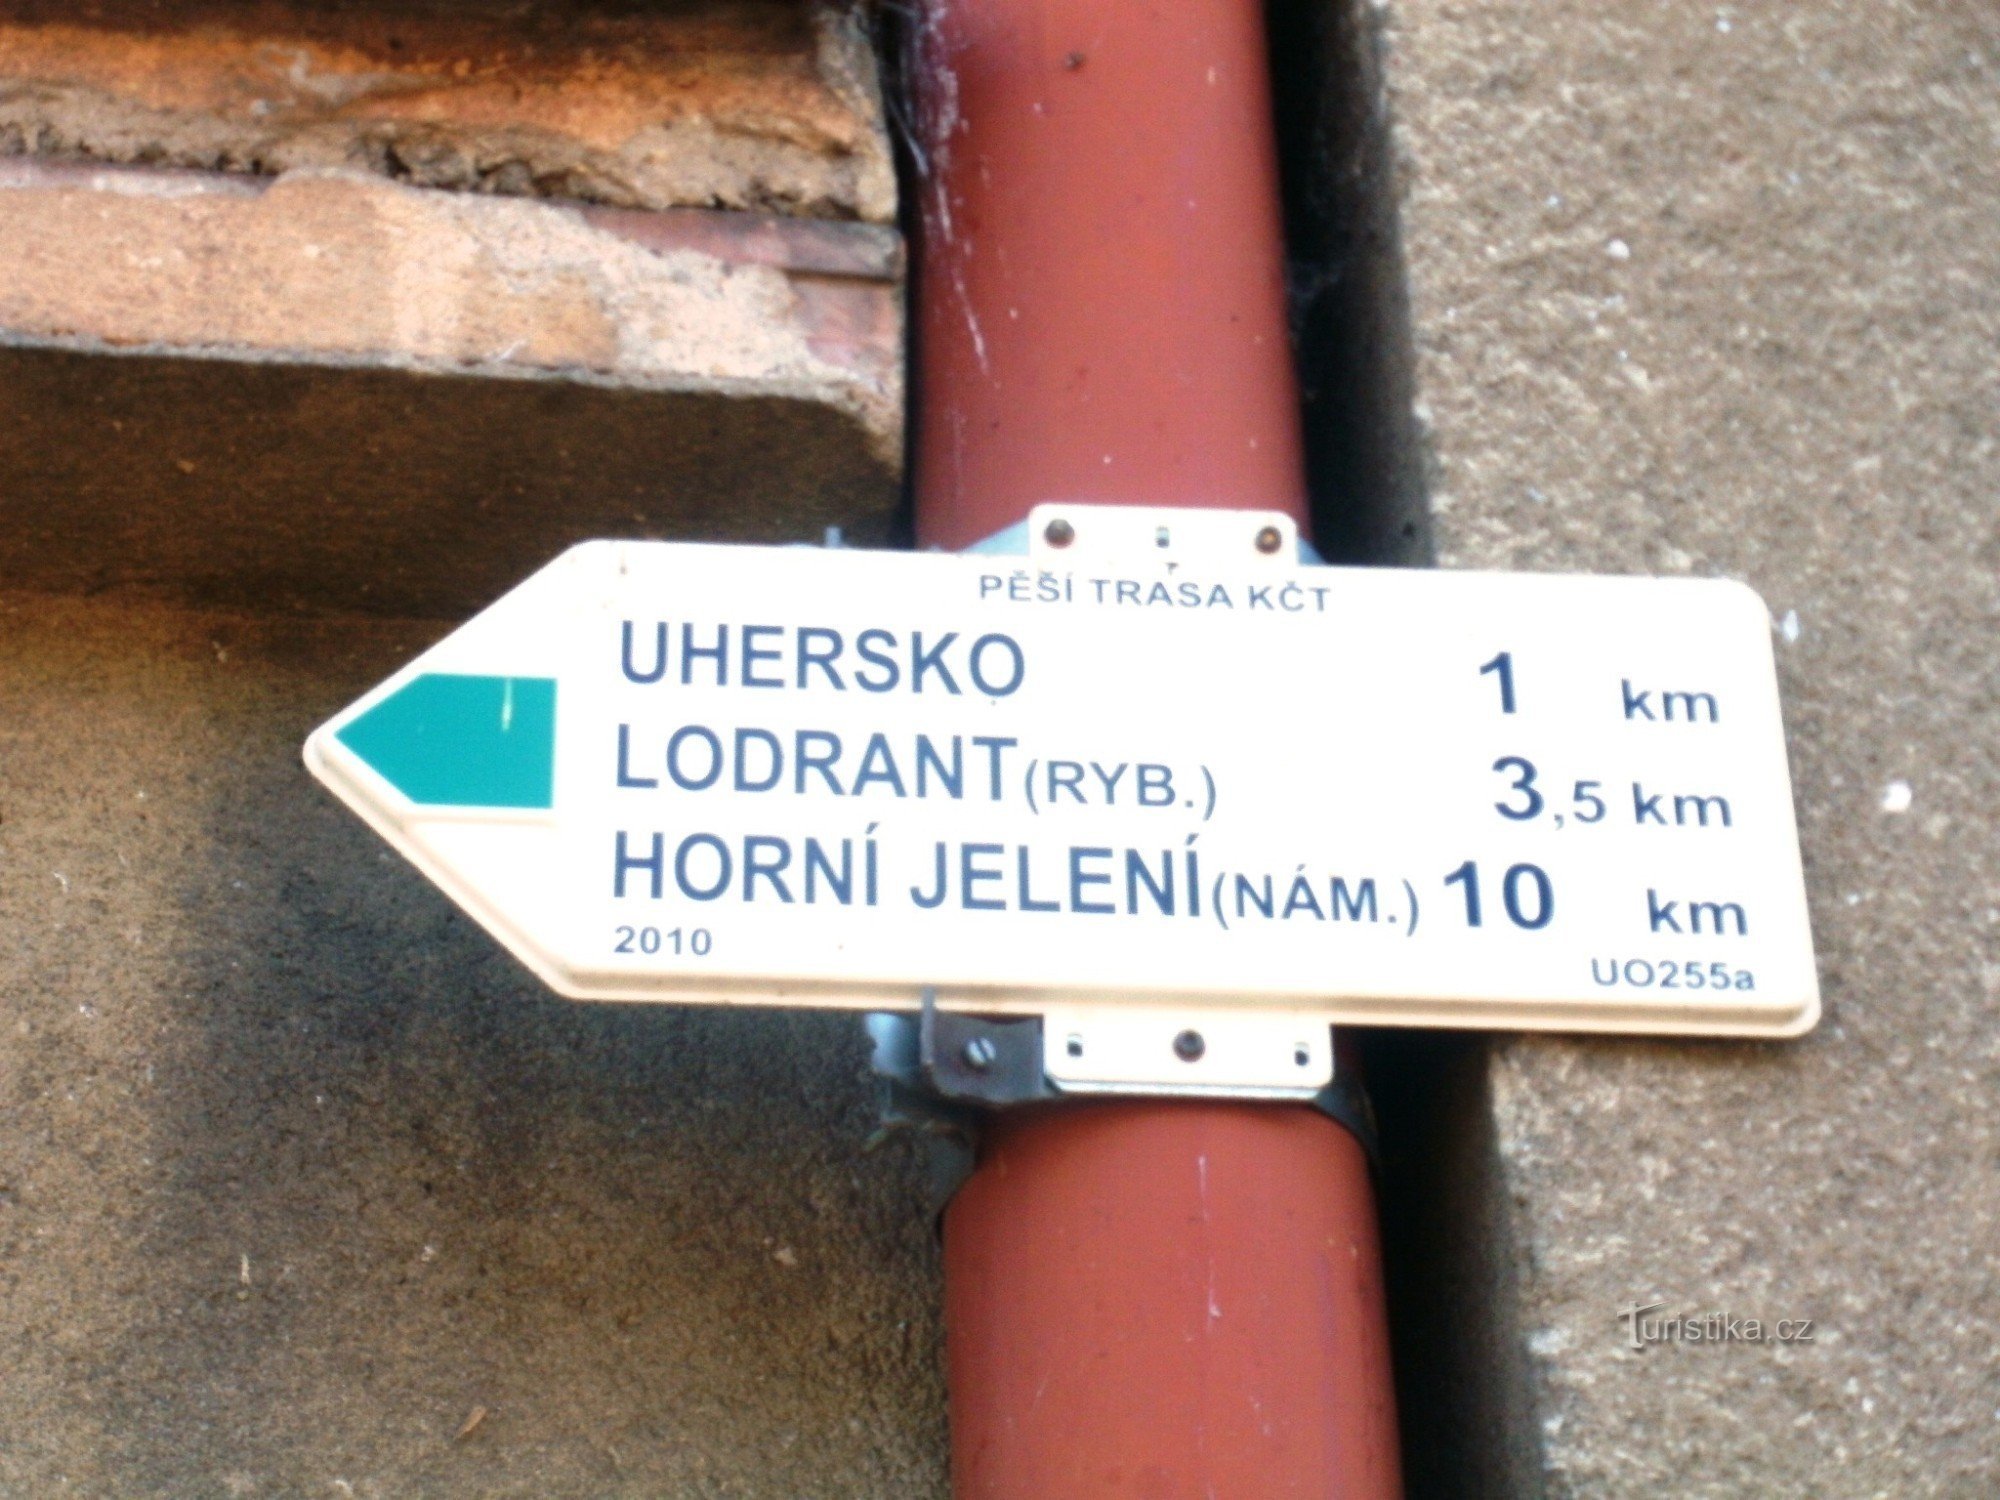 toeristisch kruispunt Hongarije - spoorweg, treinstation